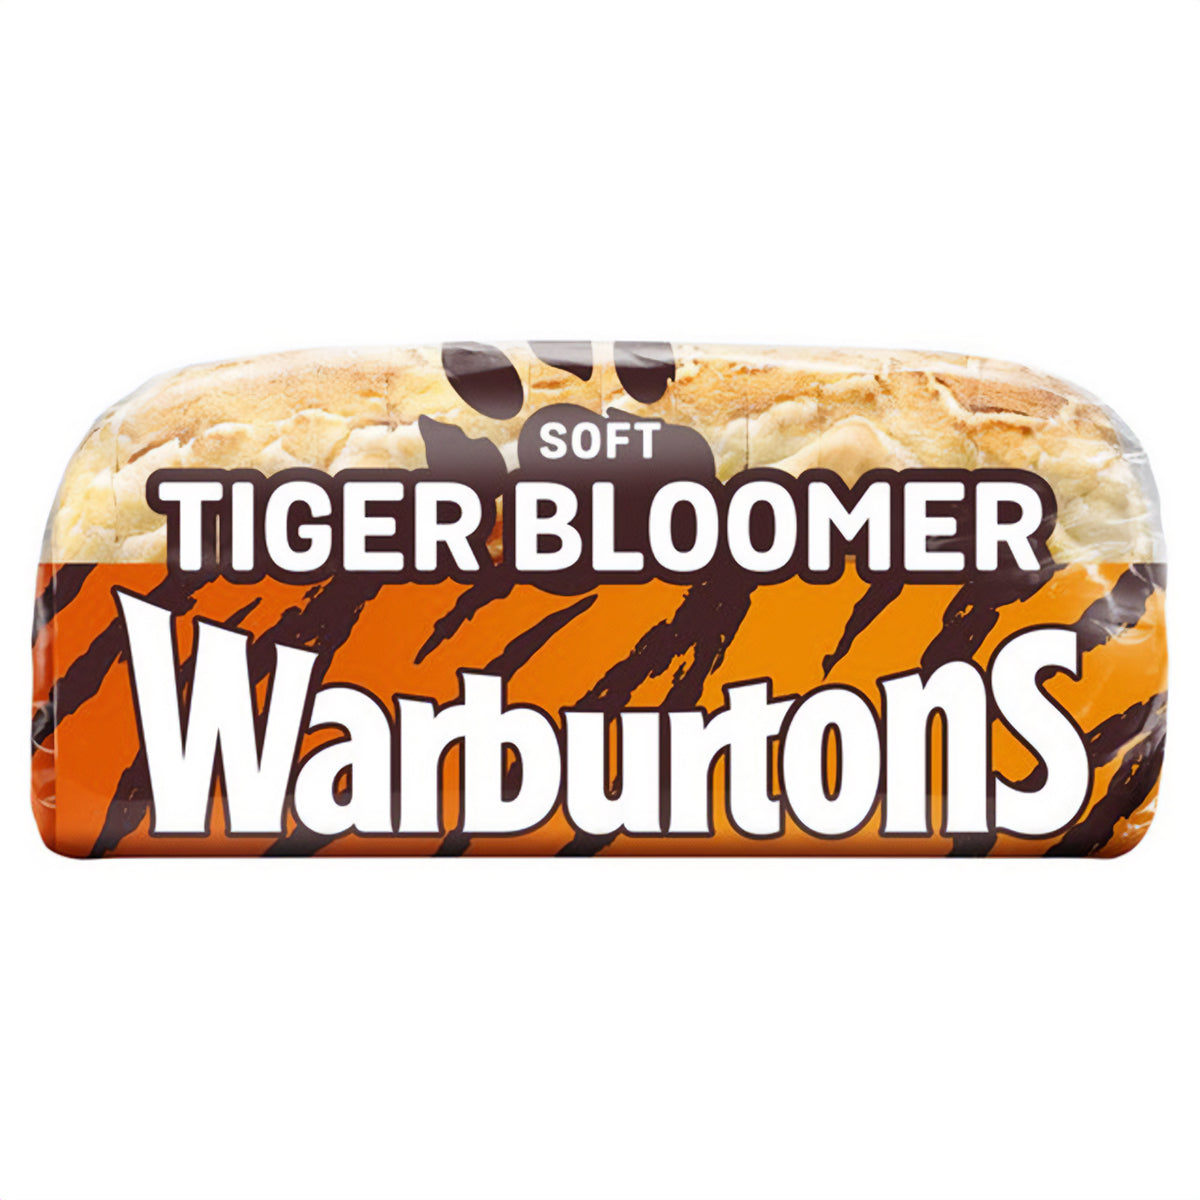 Warburtons - Tiger - 600g soft tiger bloomer Warburtons - Tiger - 600g soft tiger bloomer Warburtons - Tiger - 600g soft tiger bloomer Warburtons.